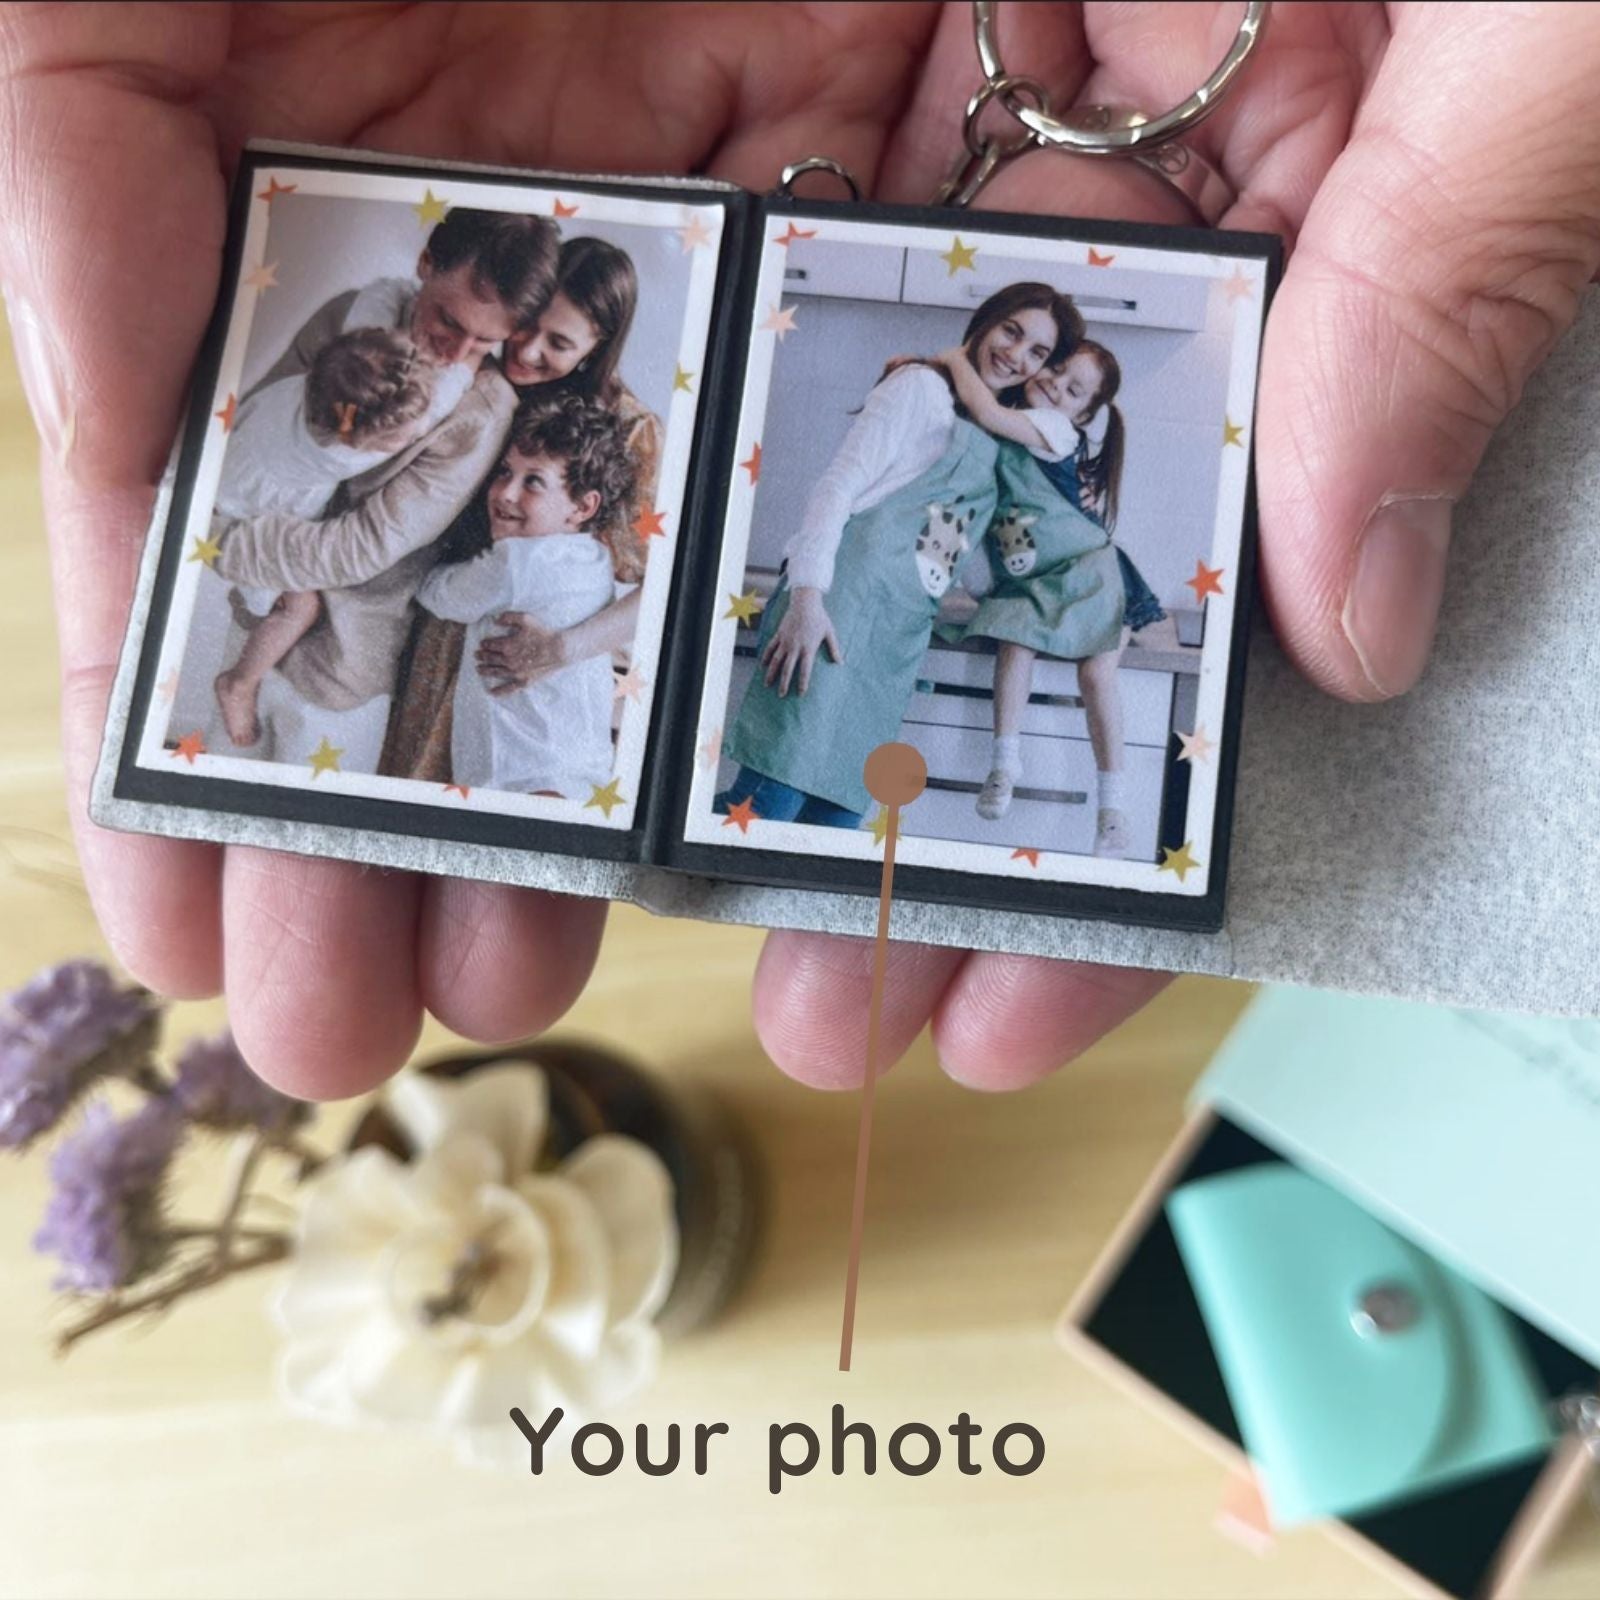 Mini Photo Album Keychain,personalized Photo Album,boyfriend Christmas  Gift,christmas Gifts for Her 